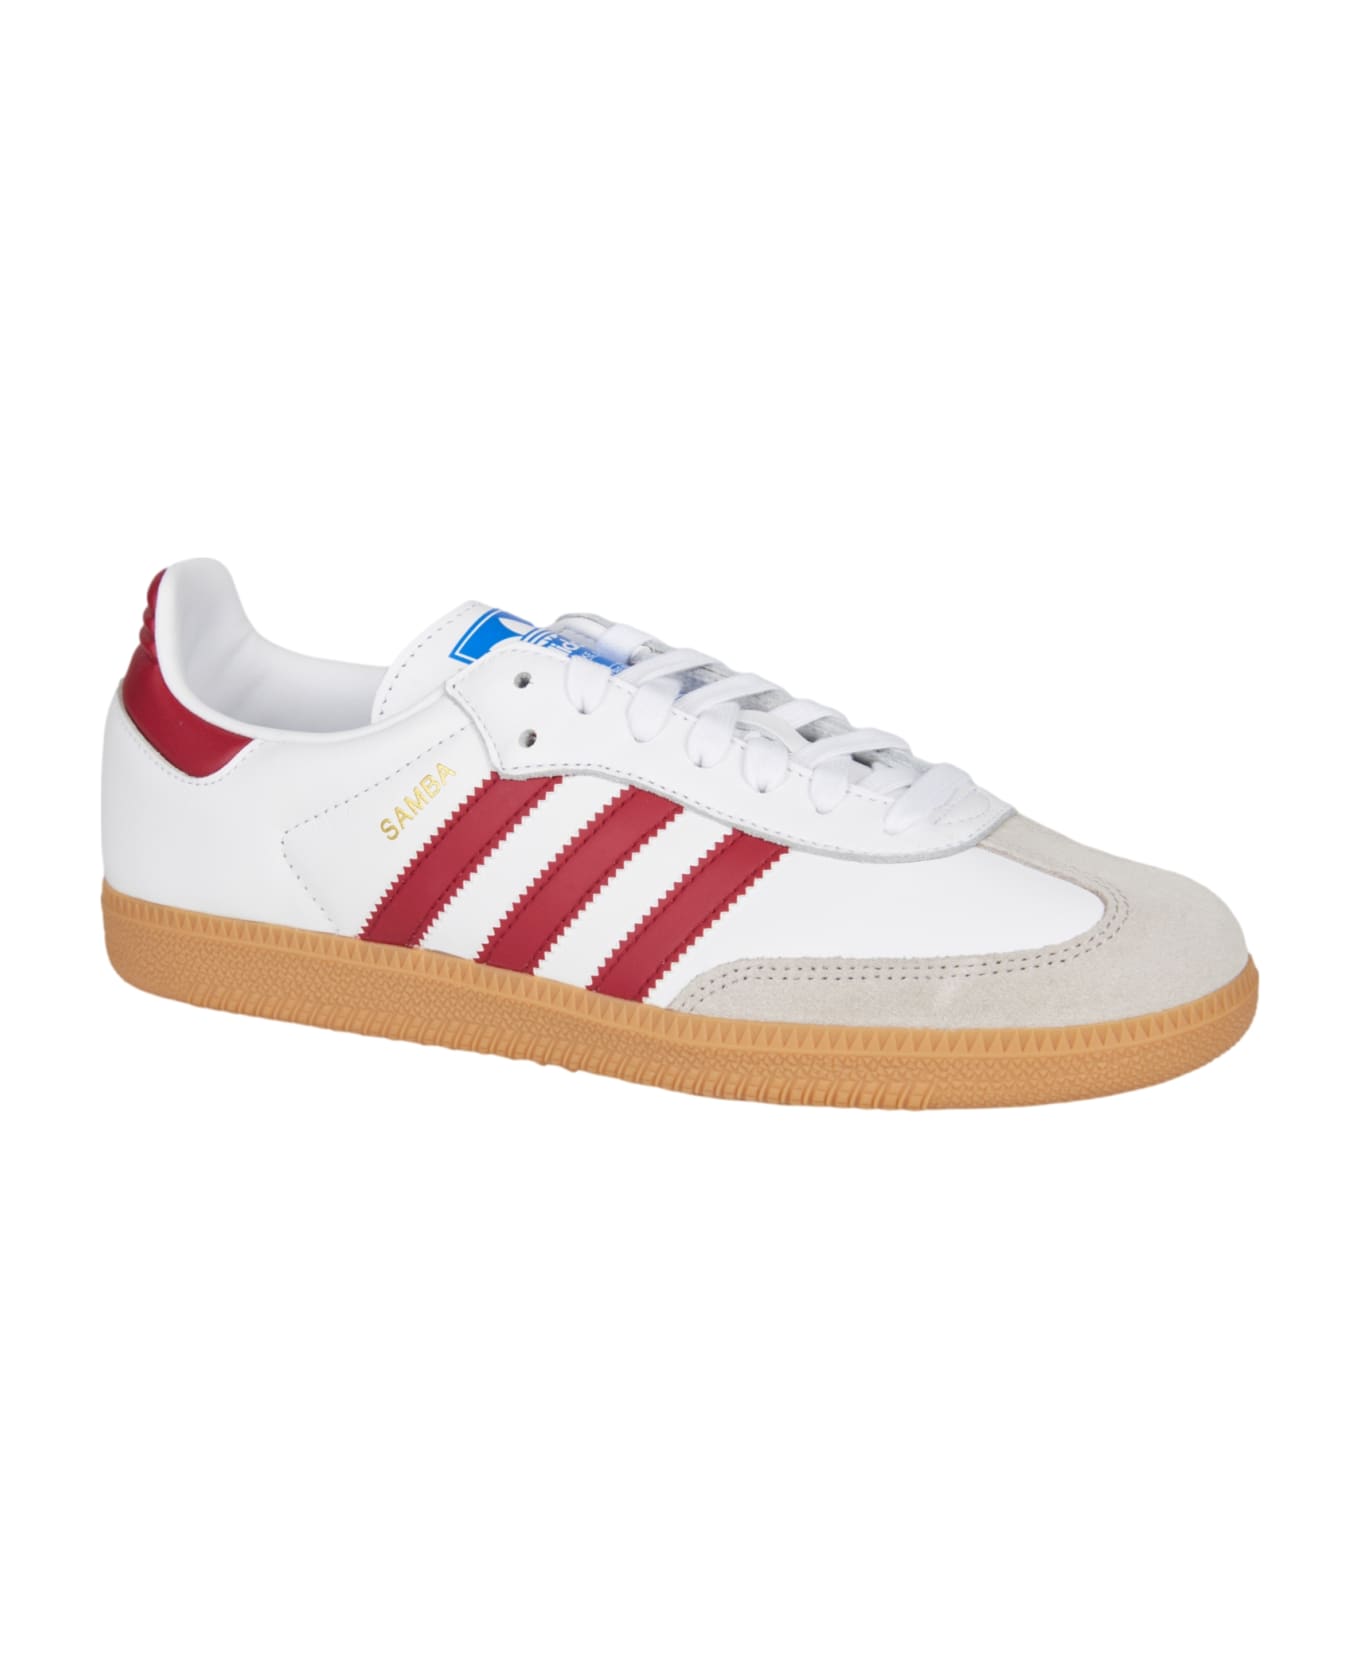 Adidas Samba Og Sneakers - White/Red